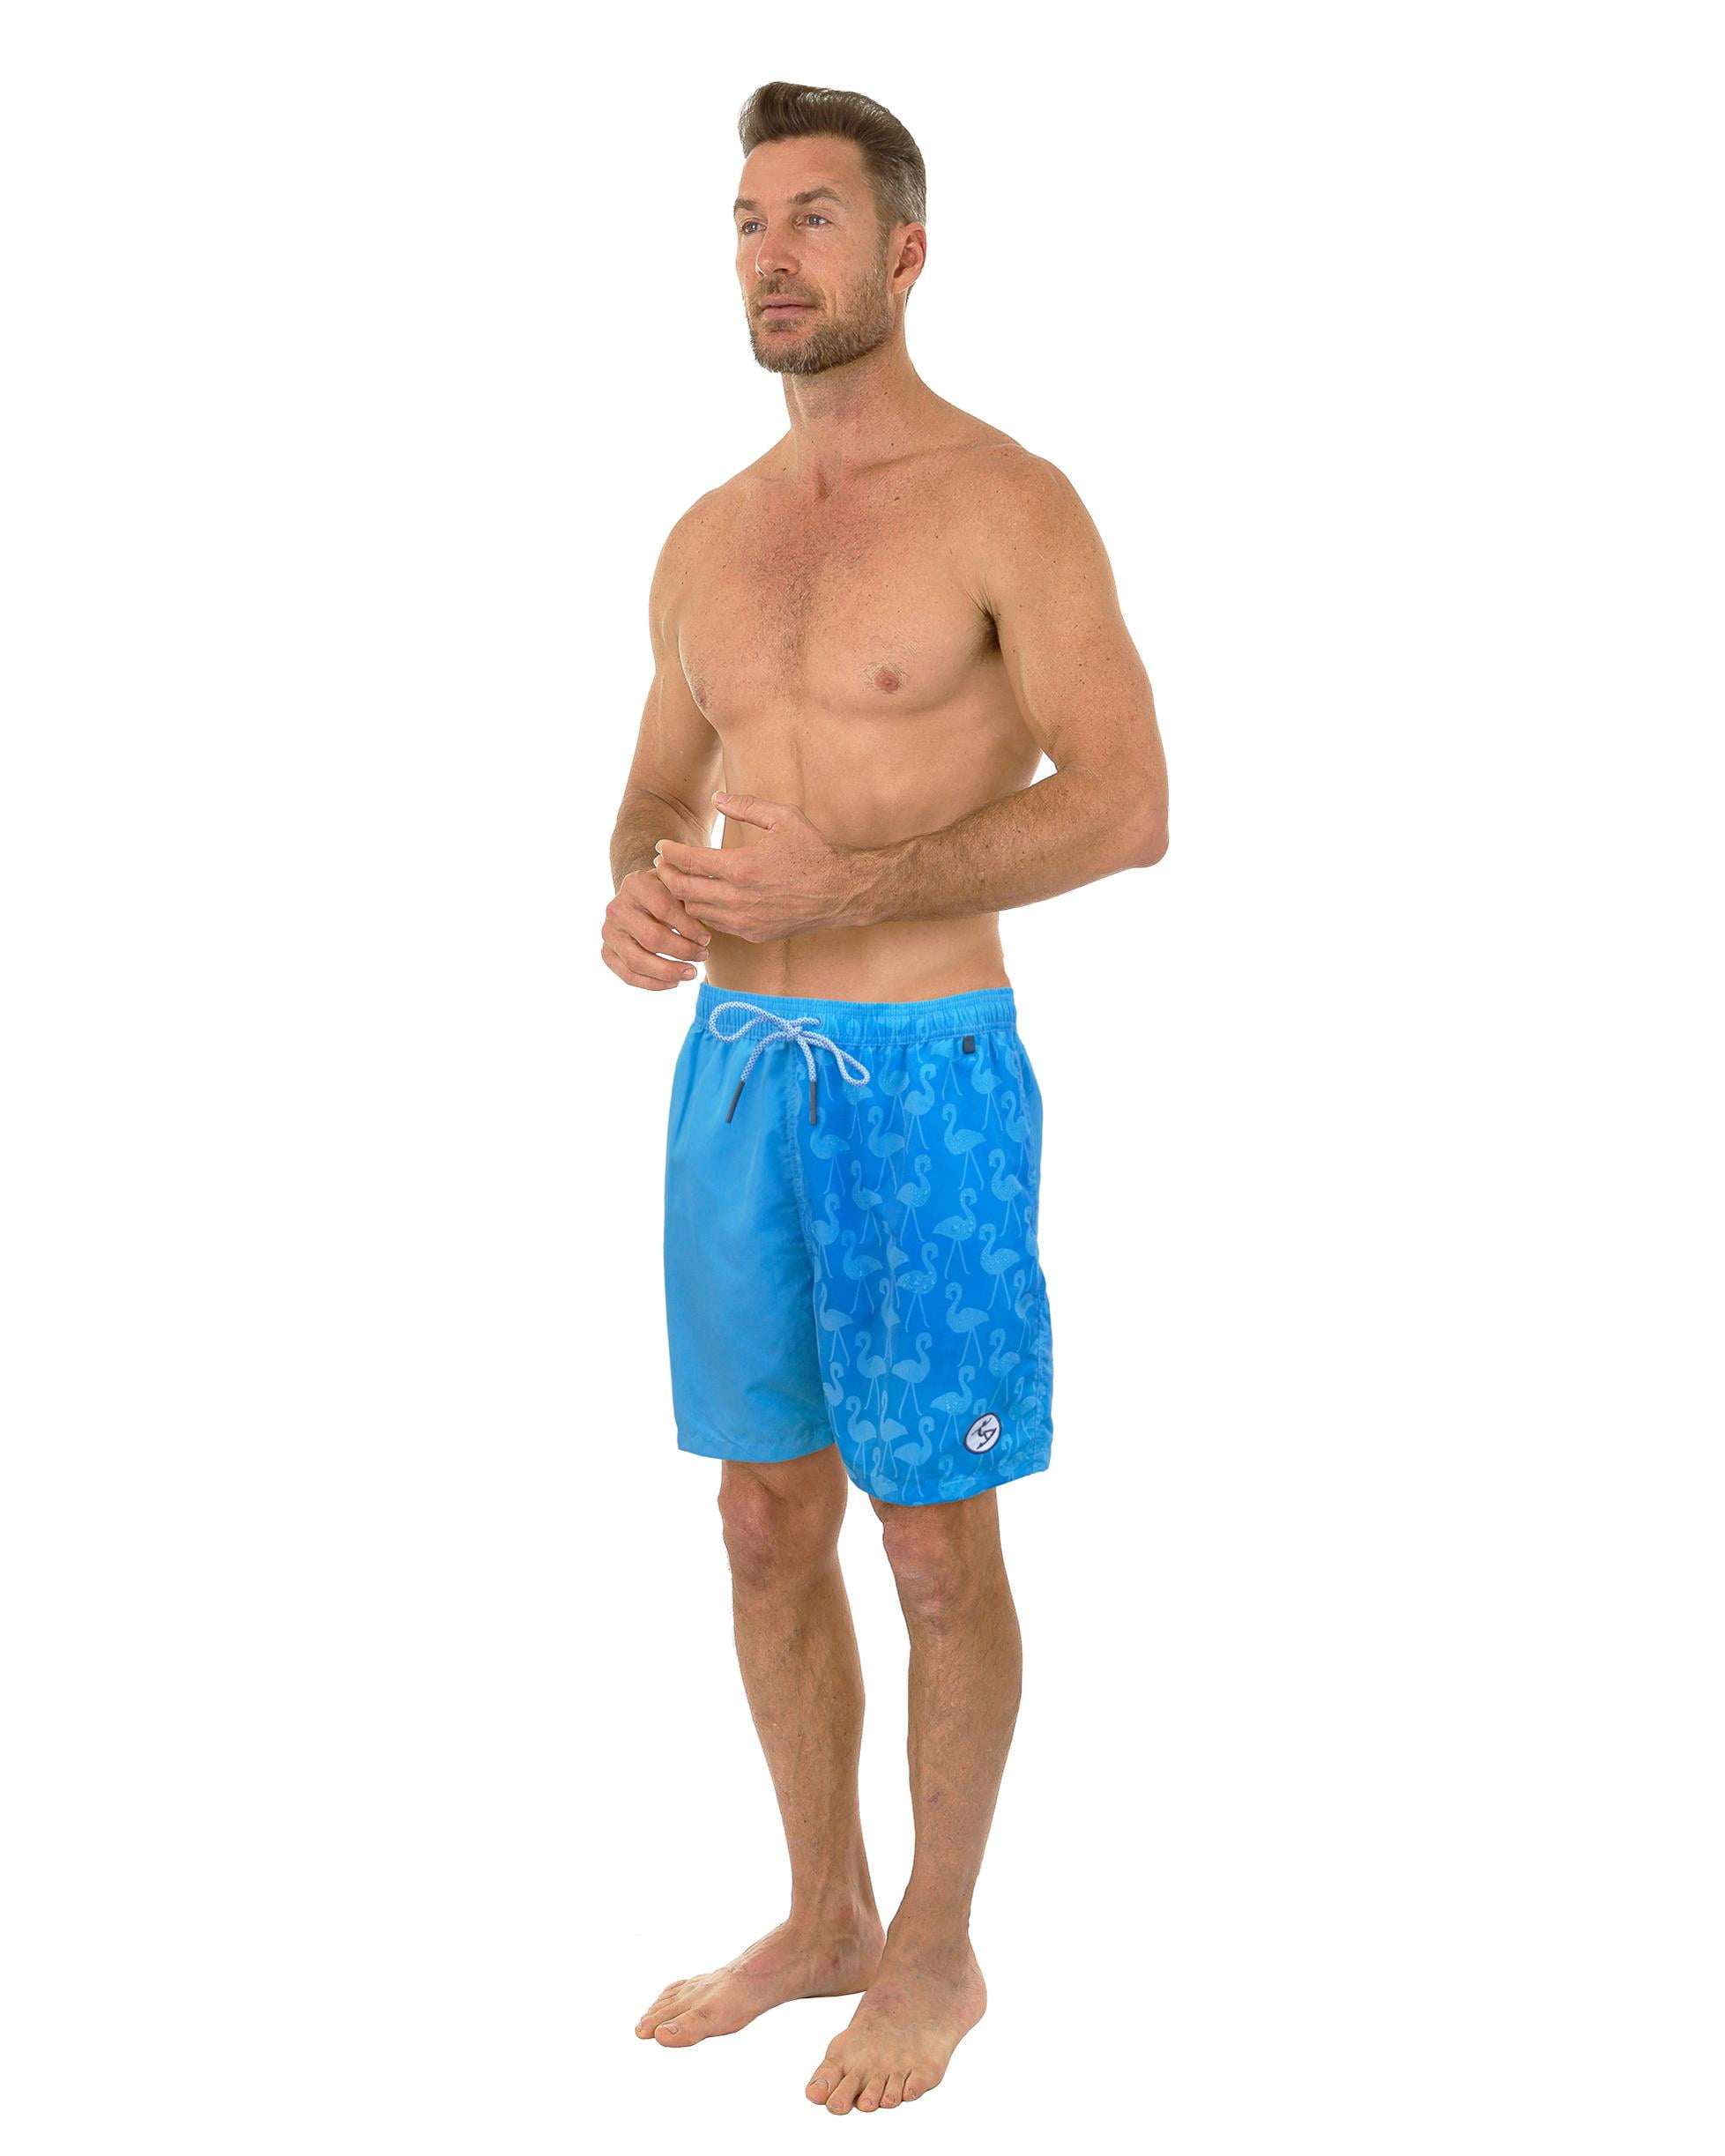 Uzzi Mens Swimming Shorts Beachwear Boxers Swim Trunks, Blue, Size: X ...